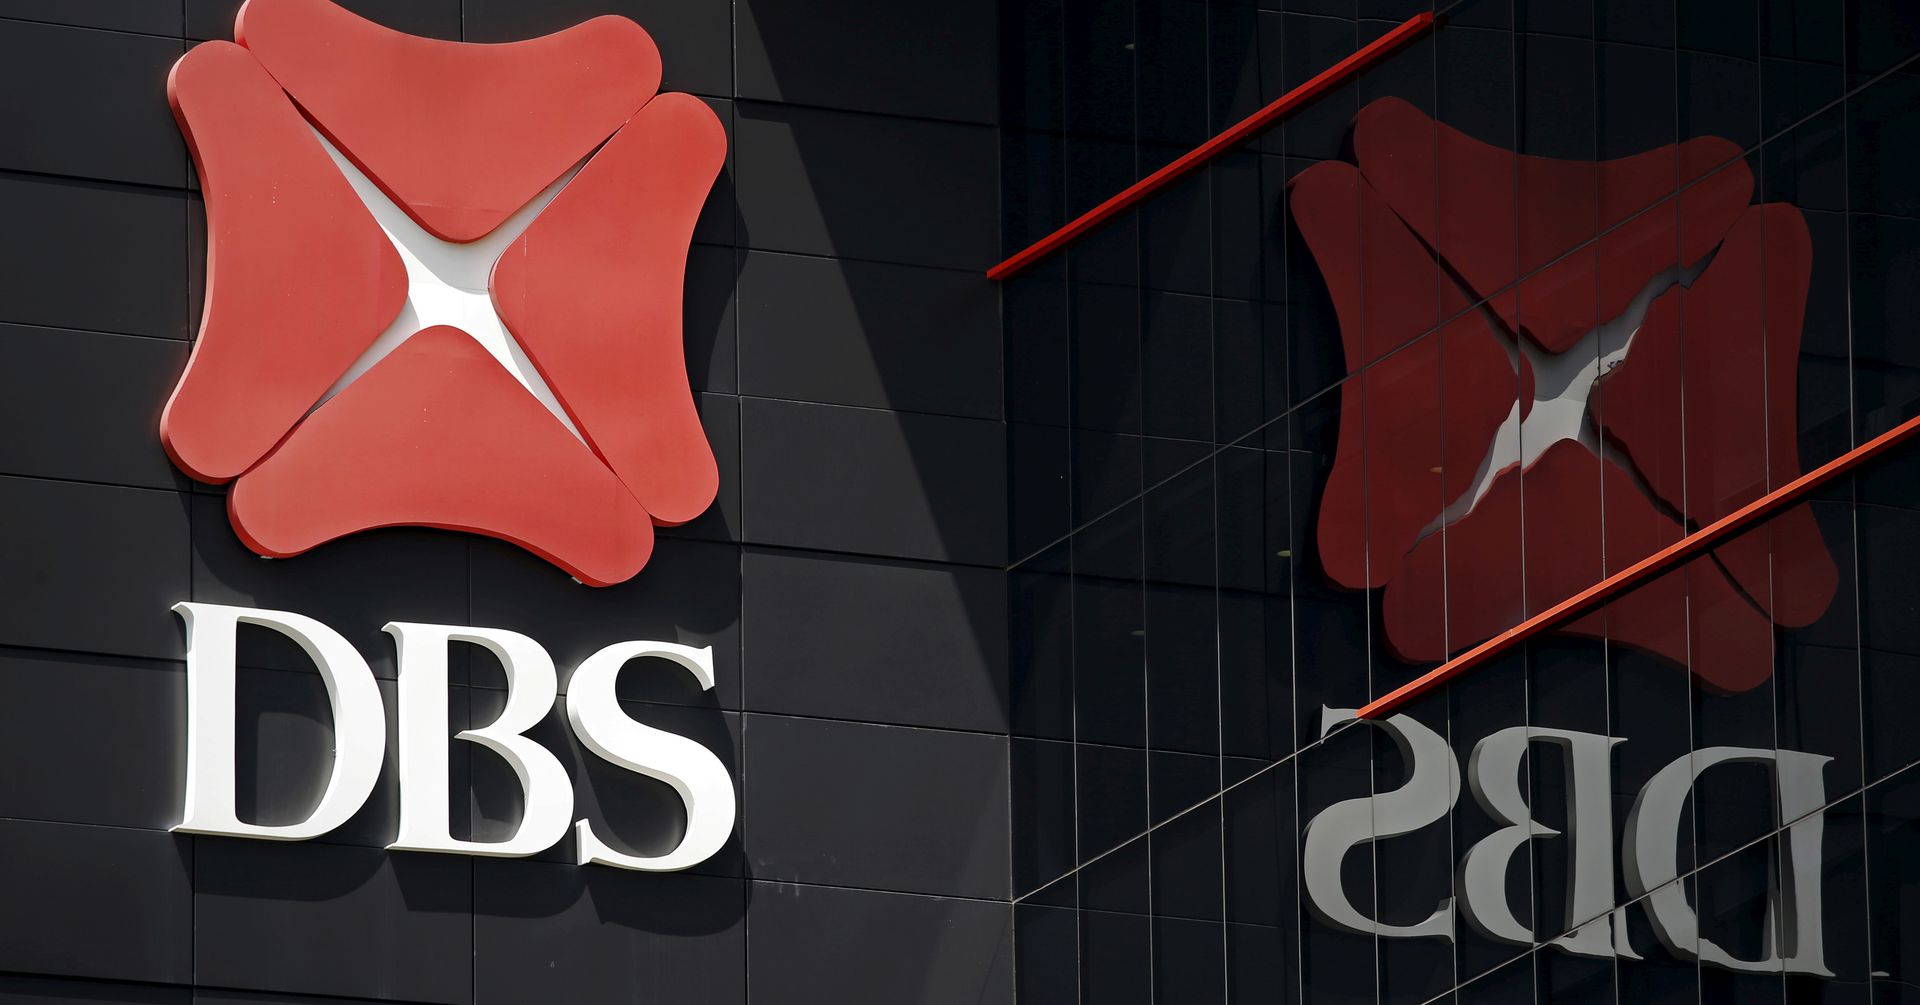 DBS Bank ของสิงคโปร์ใช้ DeFi เพื่อซื้อขาย FX และหลักทรัพย์ของรัฐ